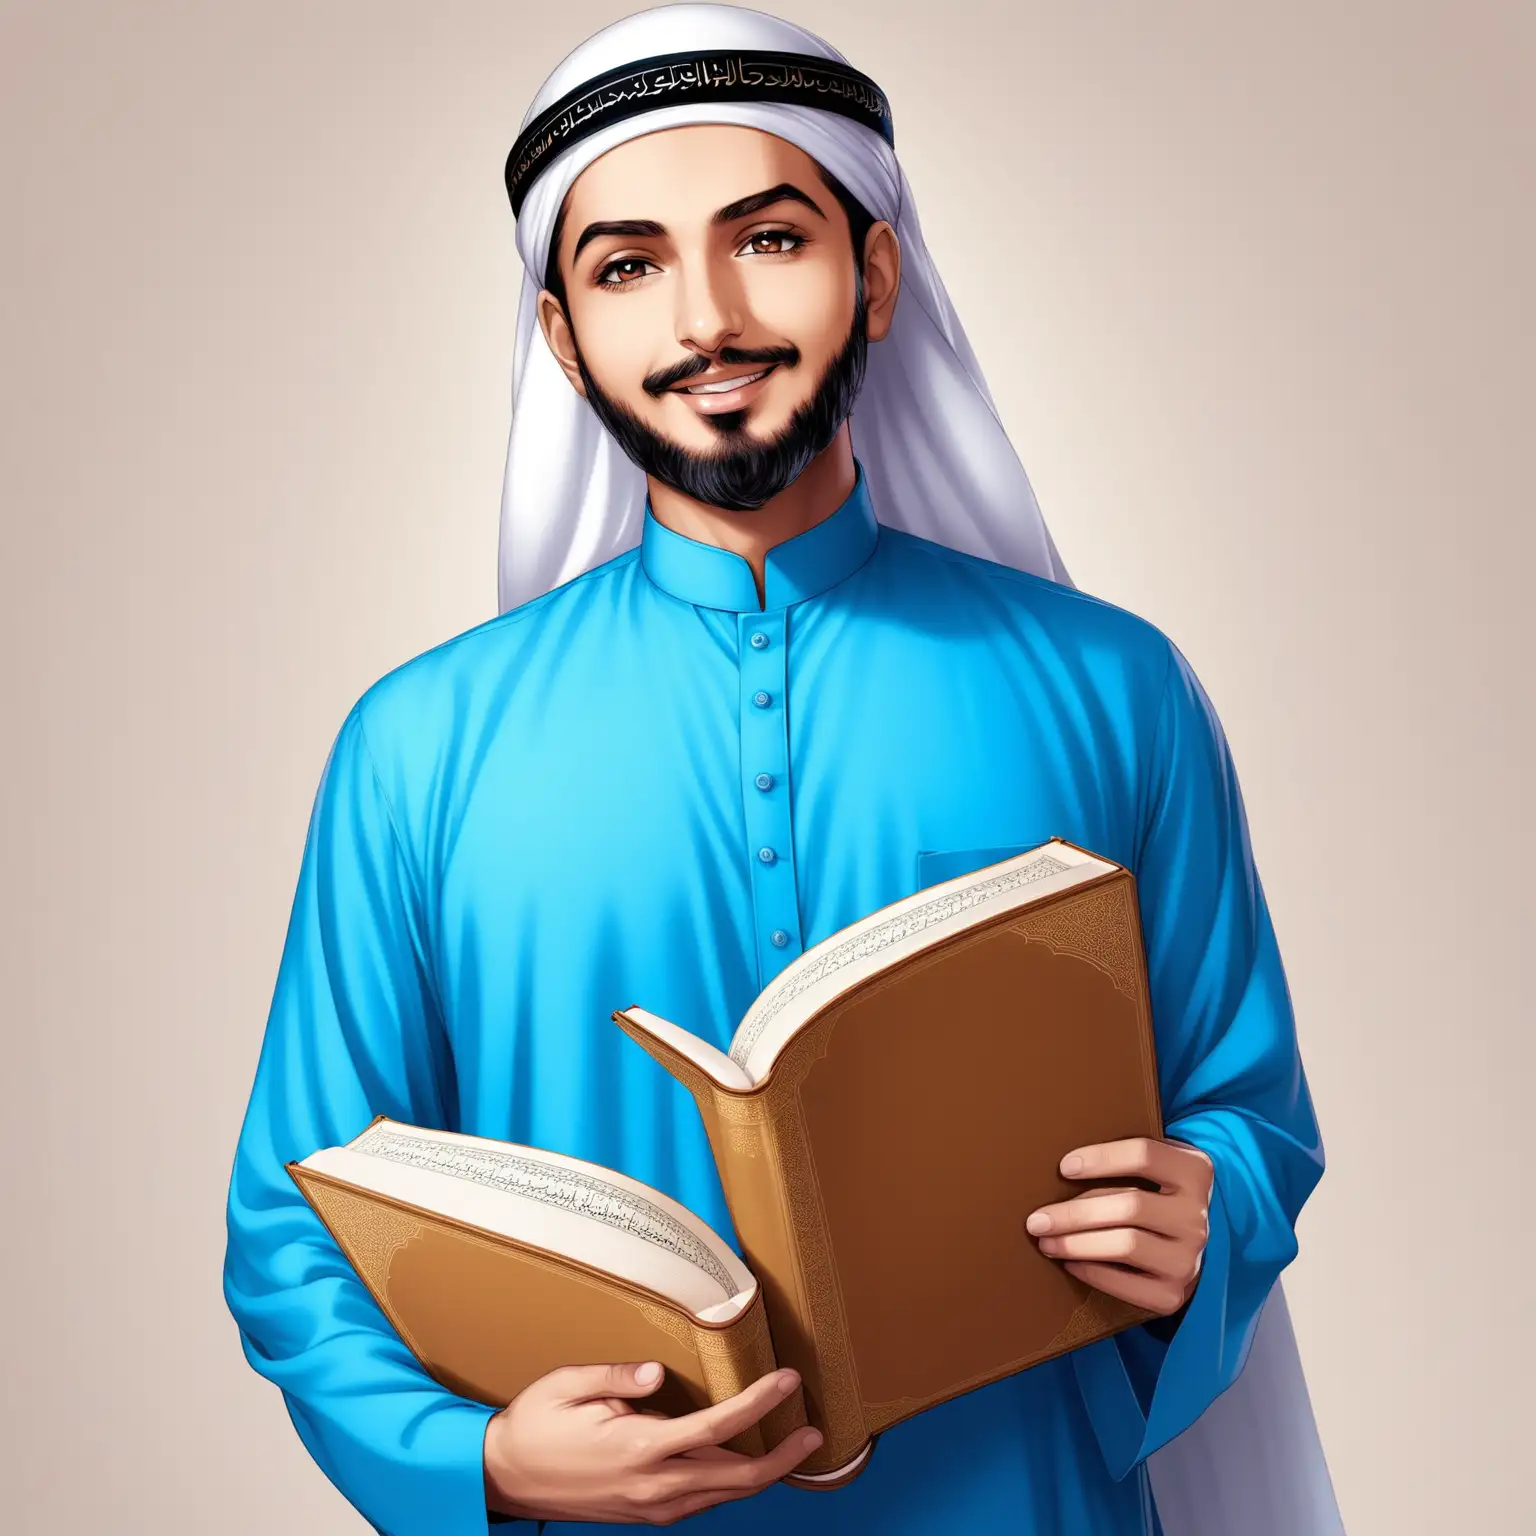 Quran Recitation Sheikh Teacher in Blue Shirt